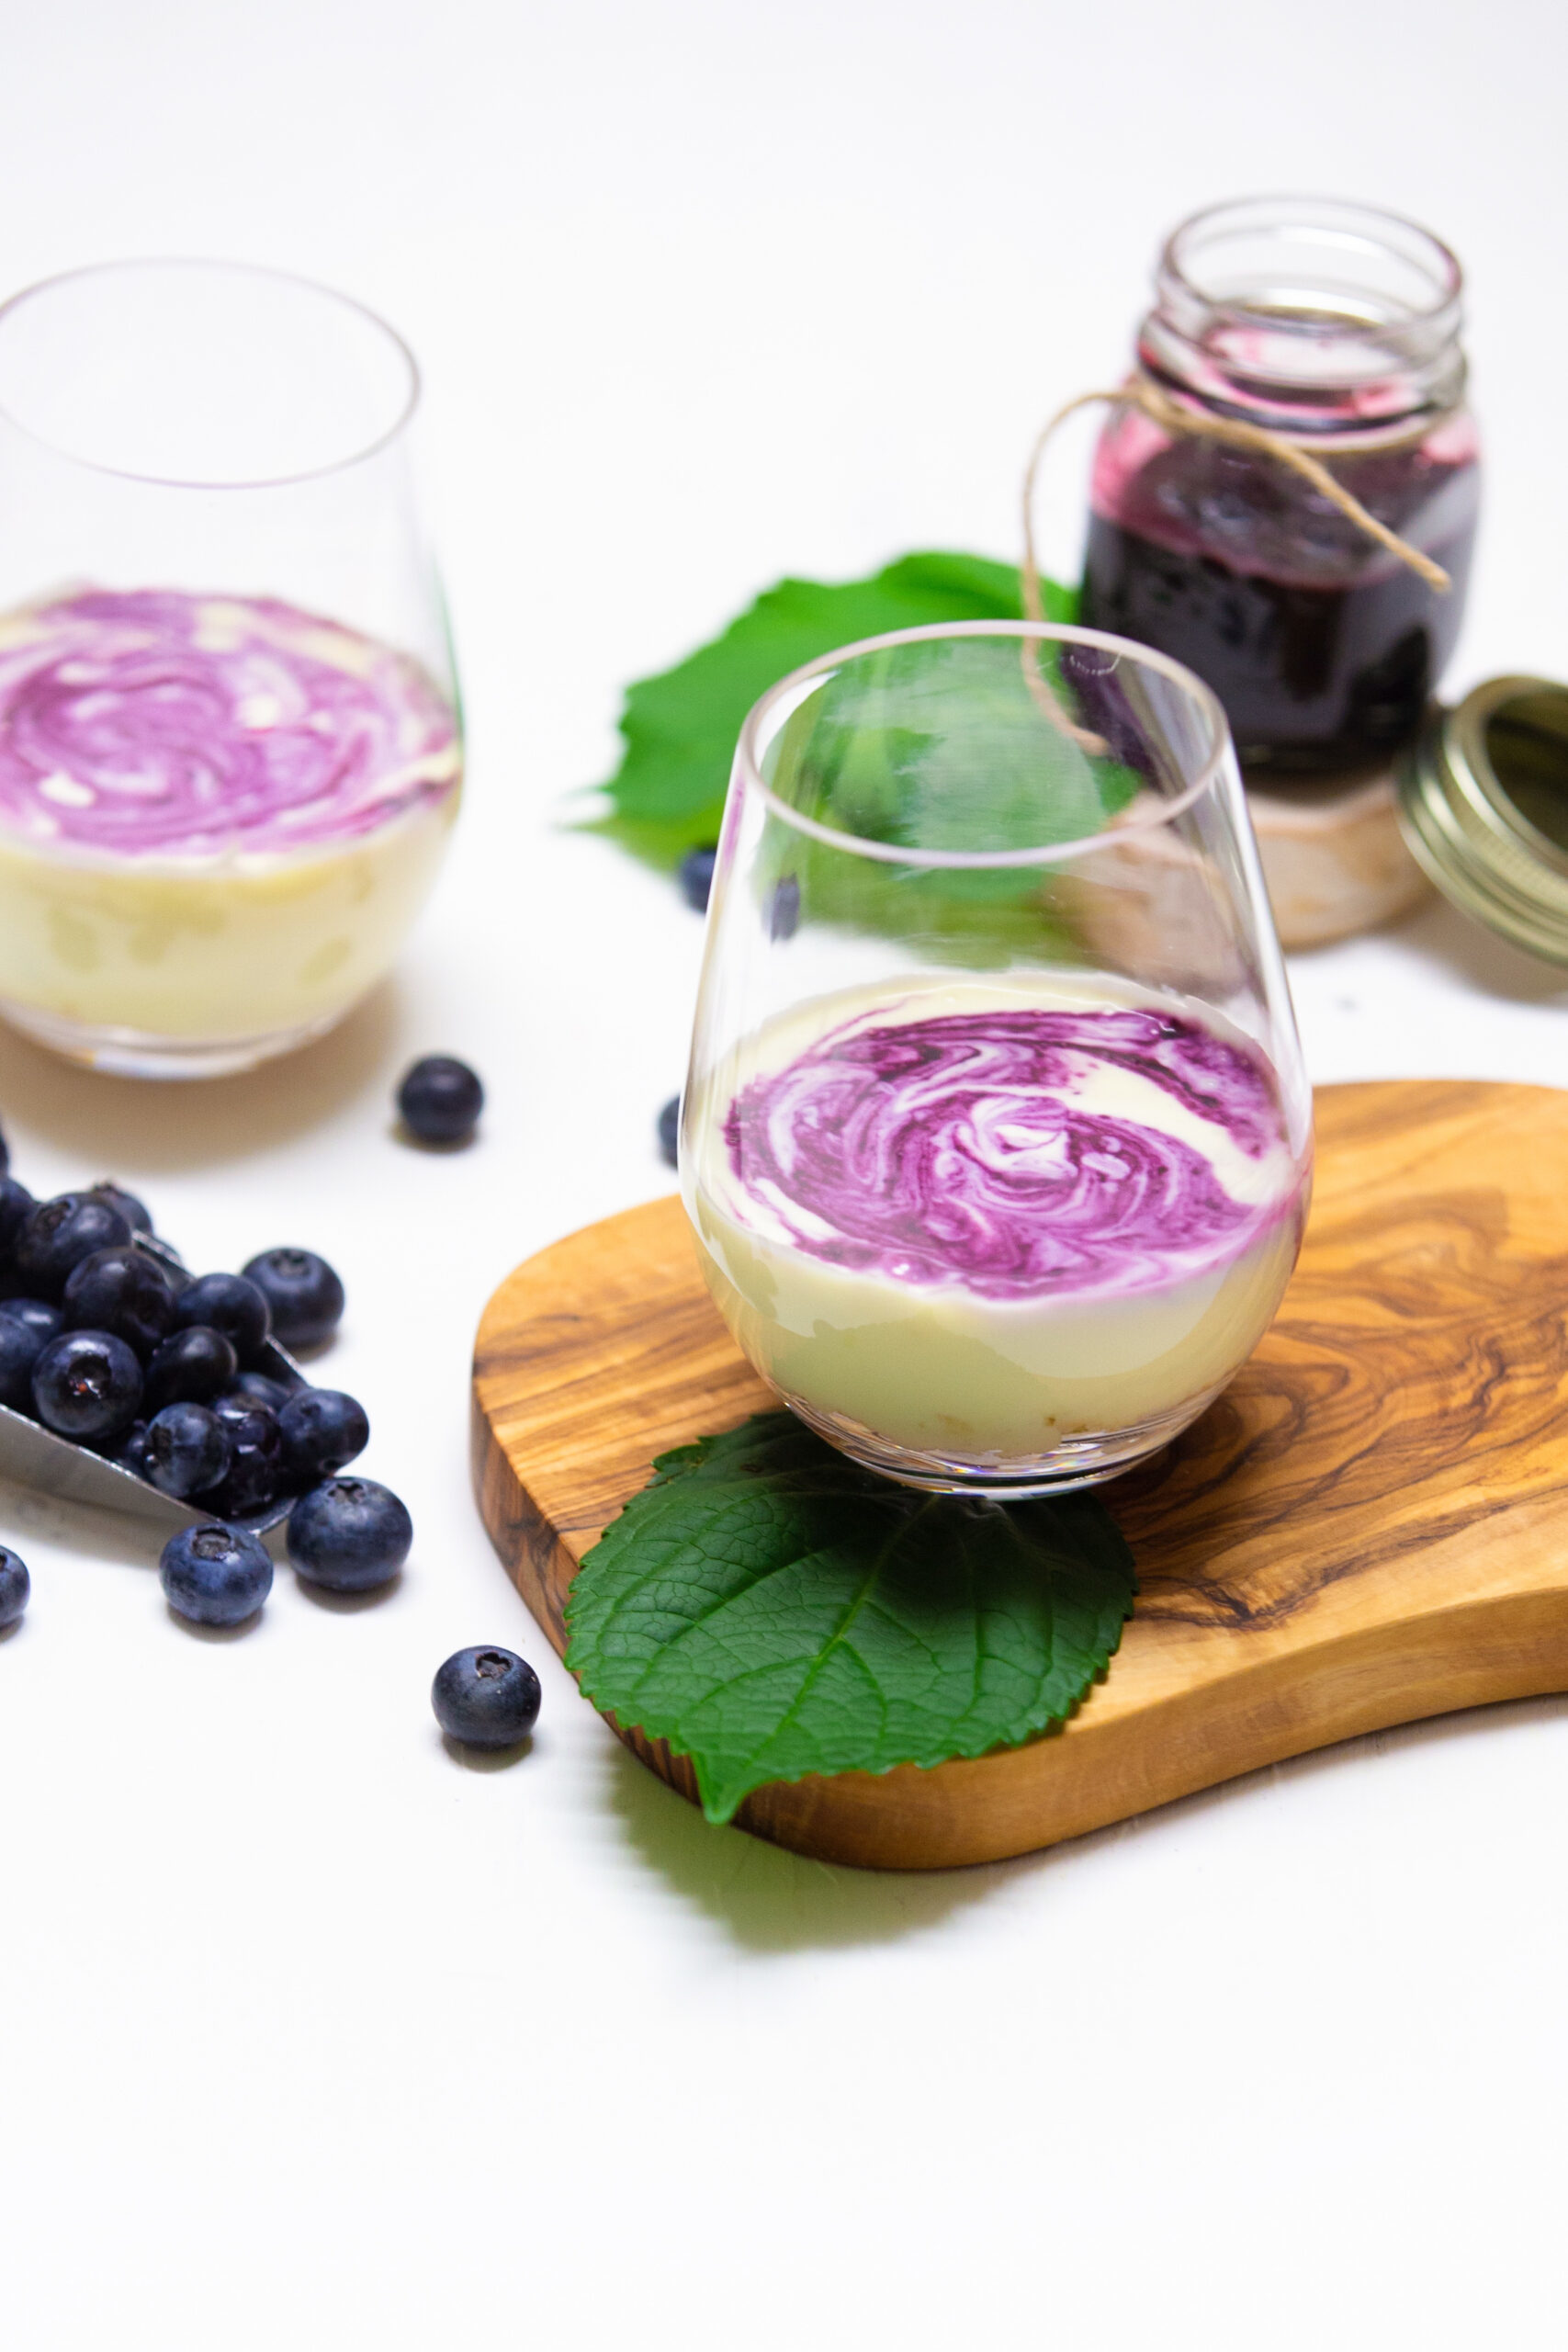 Blueberry Bourbon Cheese Cups by Charnie Kohn|@the.seasoned.palate